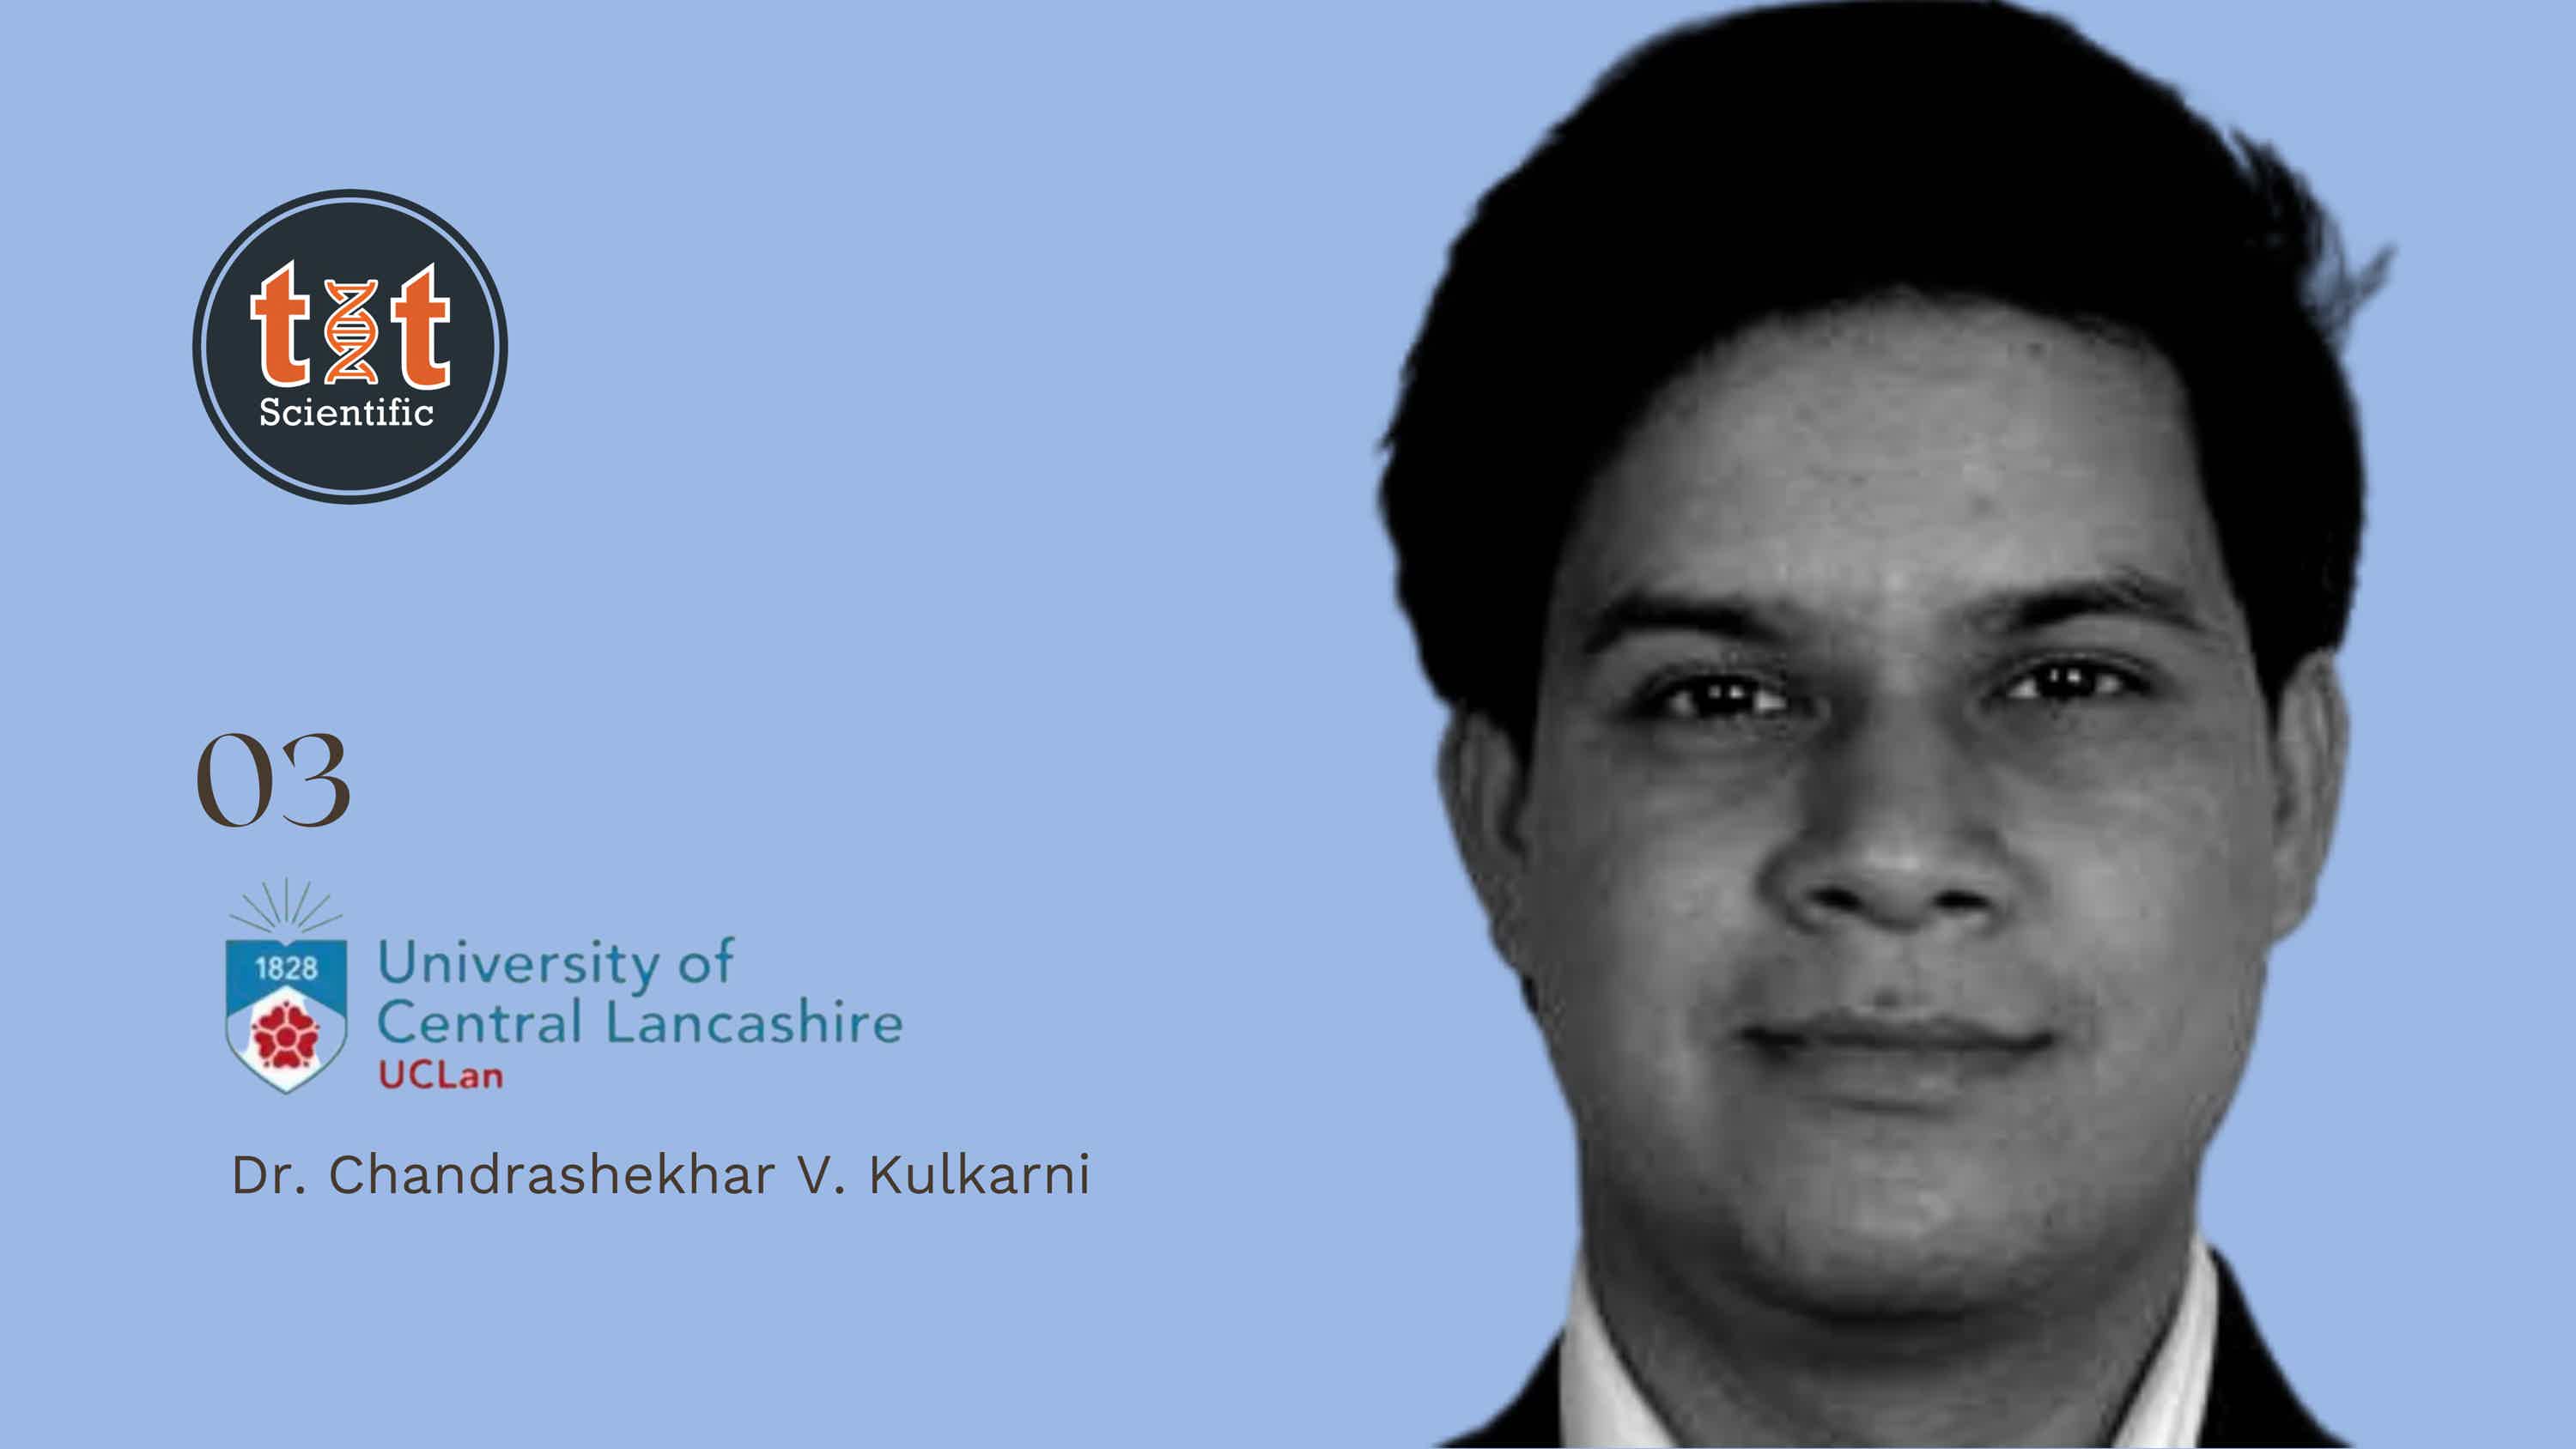 by Dr. Chandrashekhar V. Kulkarni at University of Central Lancashire